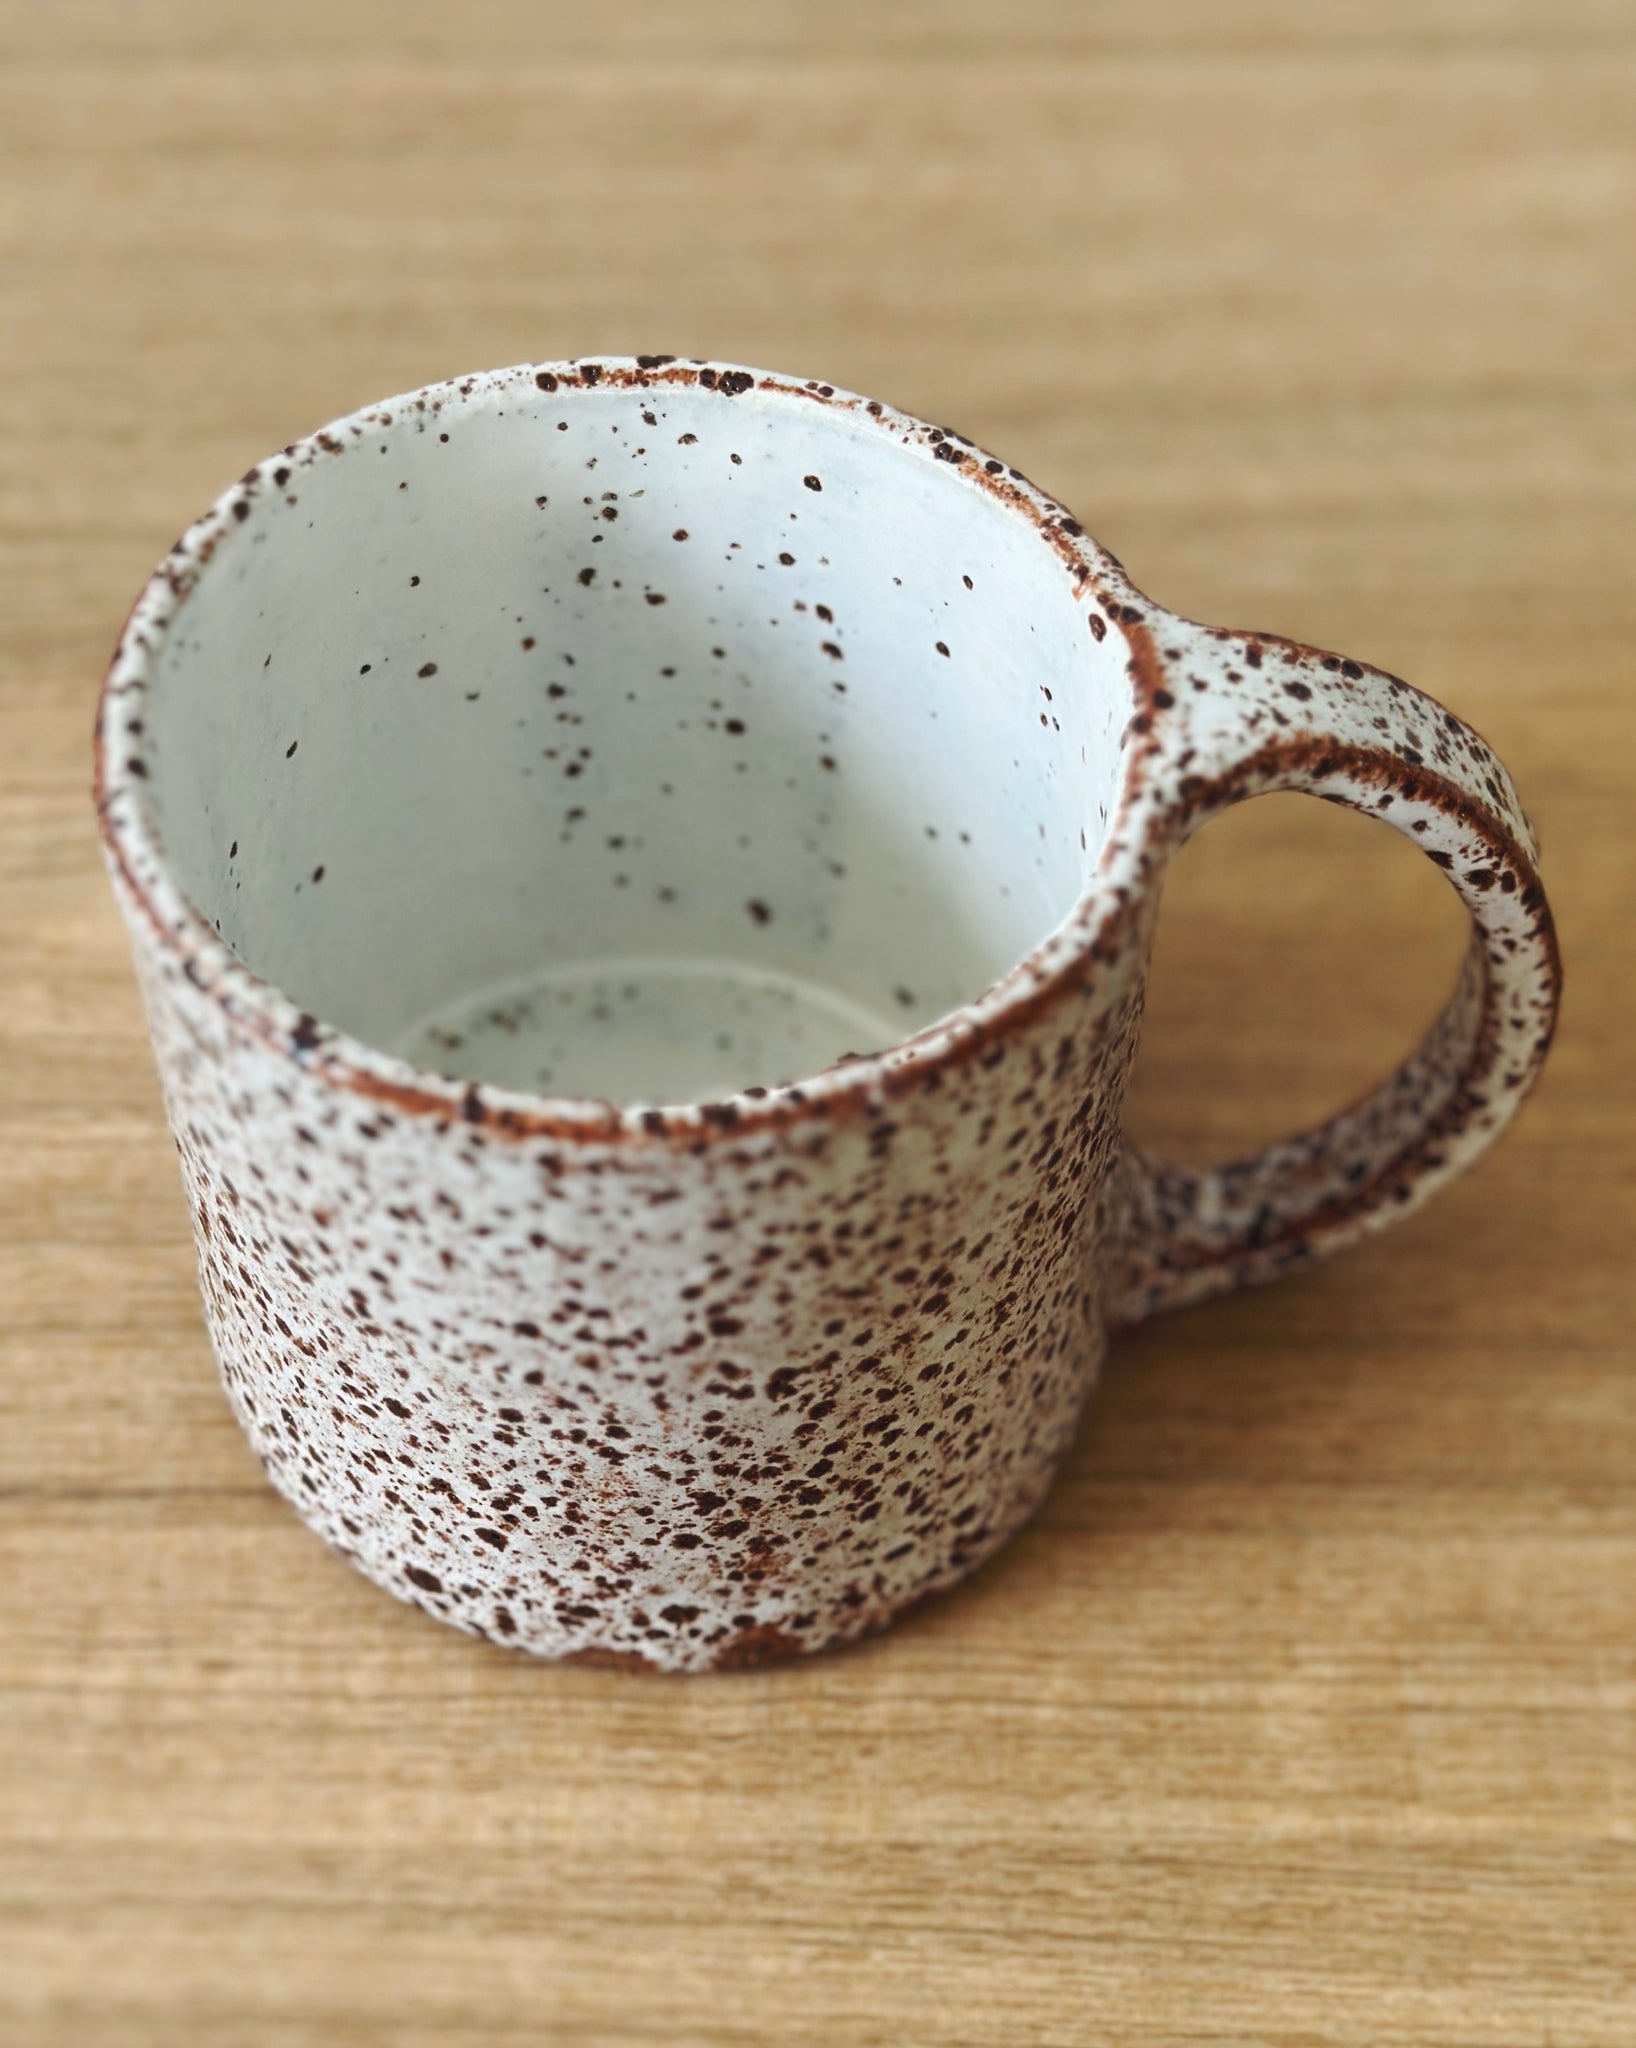 Speckled mug - regular